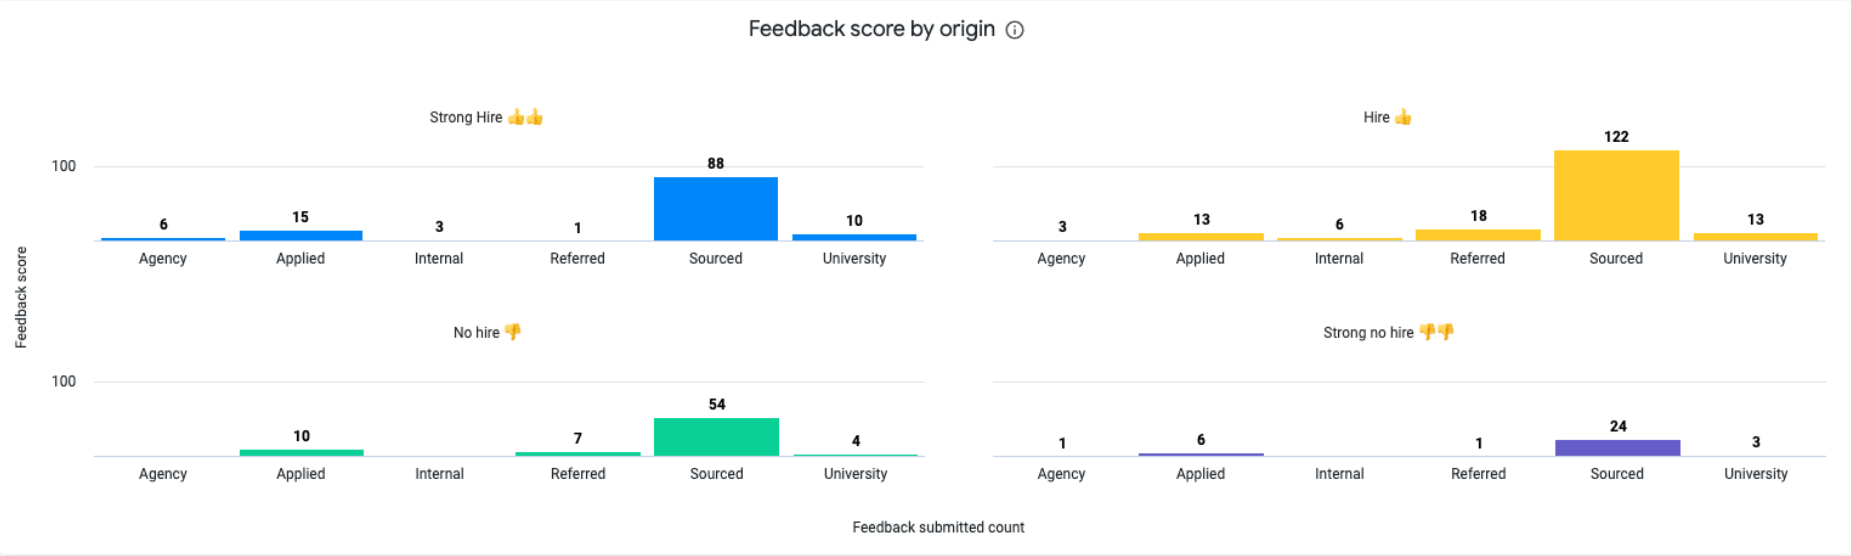 Visual Insights Feedback Dashboard Feedback score by origin chart.